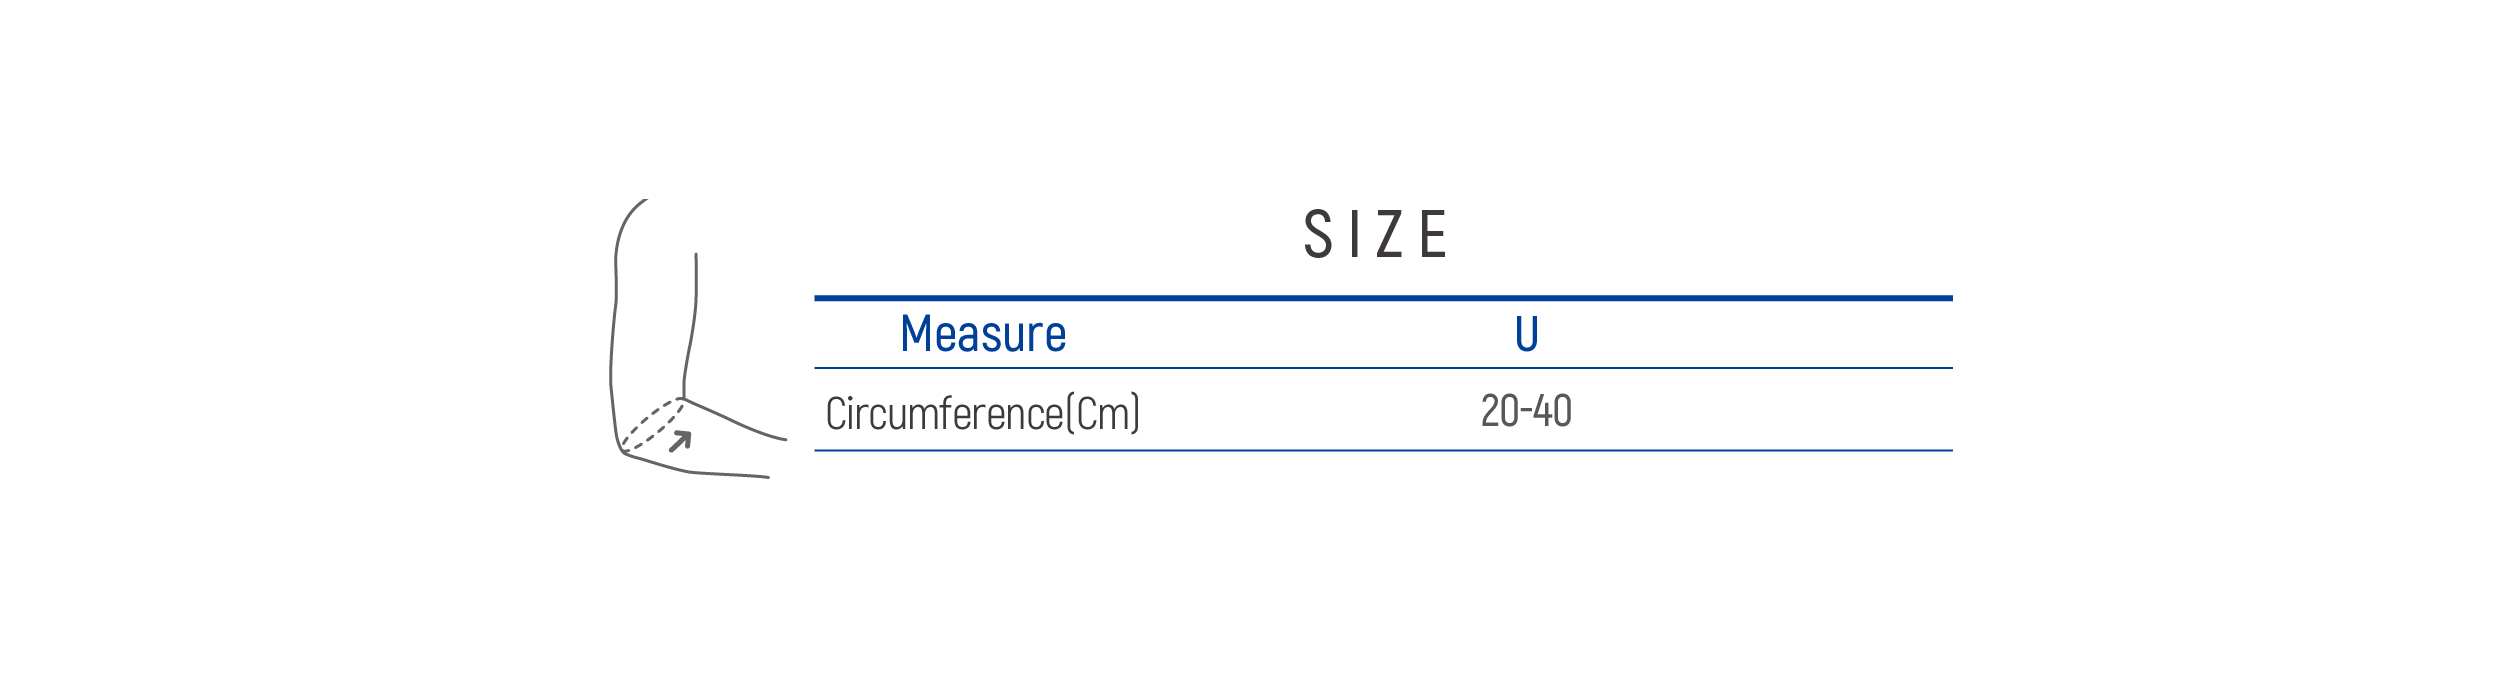 DR-E520 Size table image